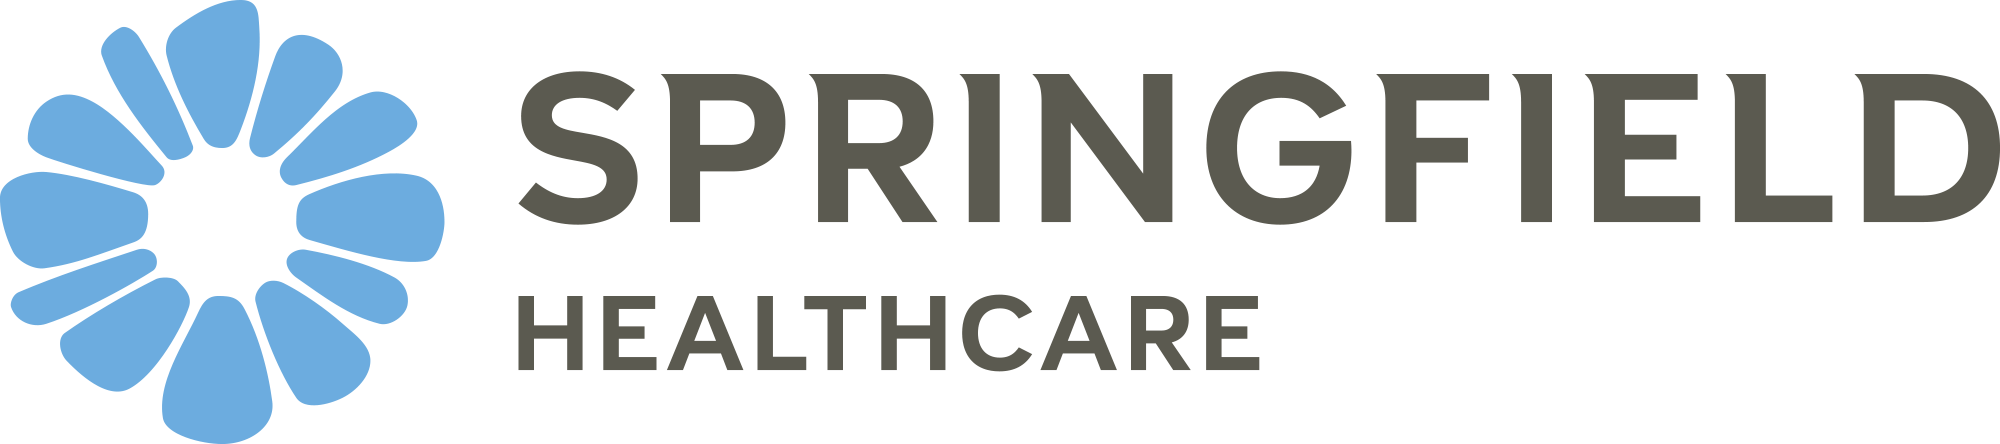 Springfield Healthcare logo